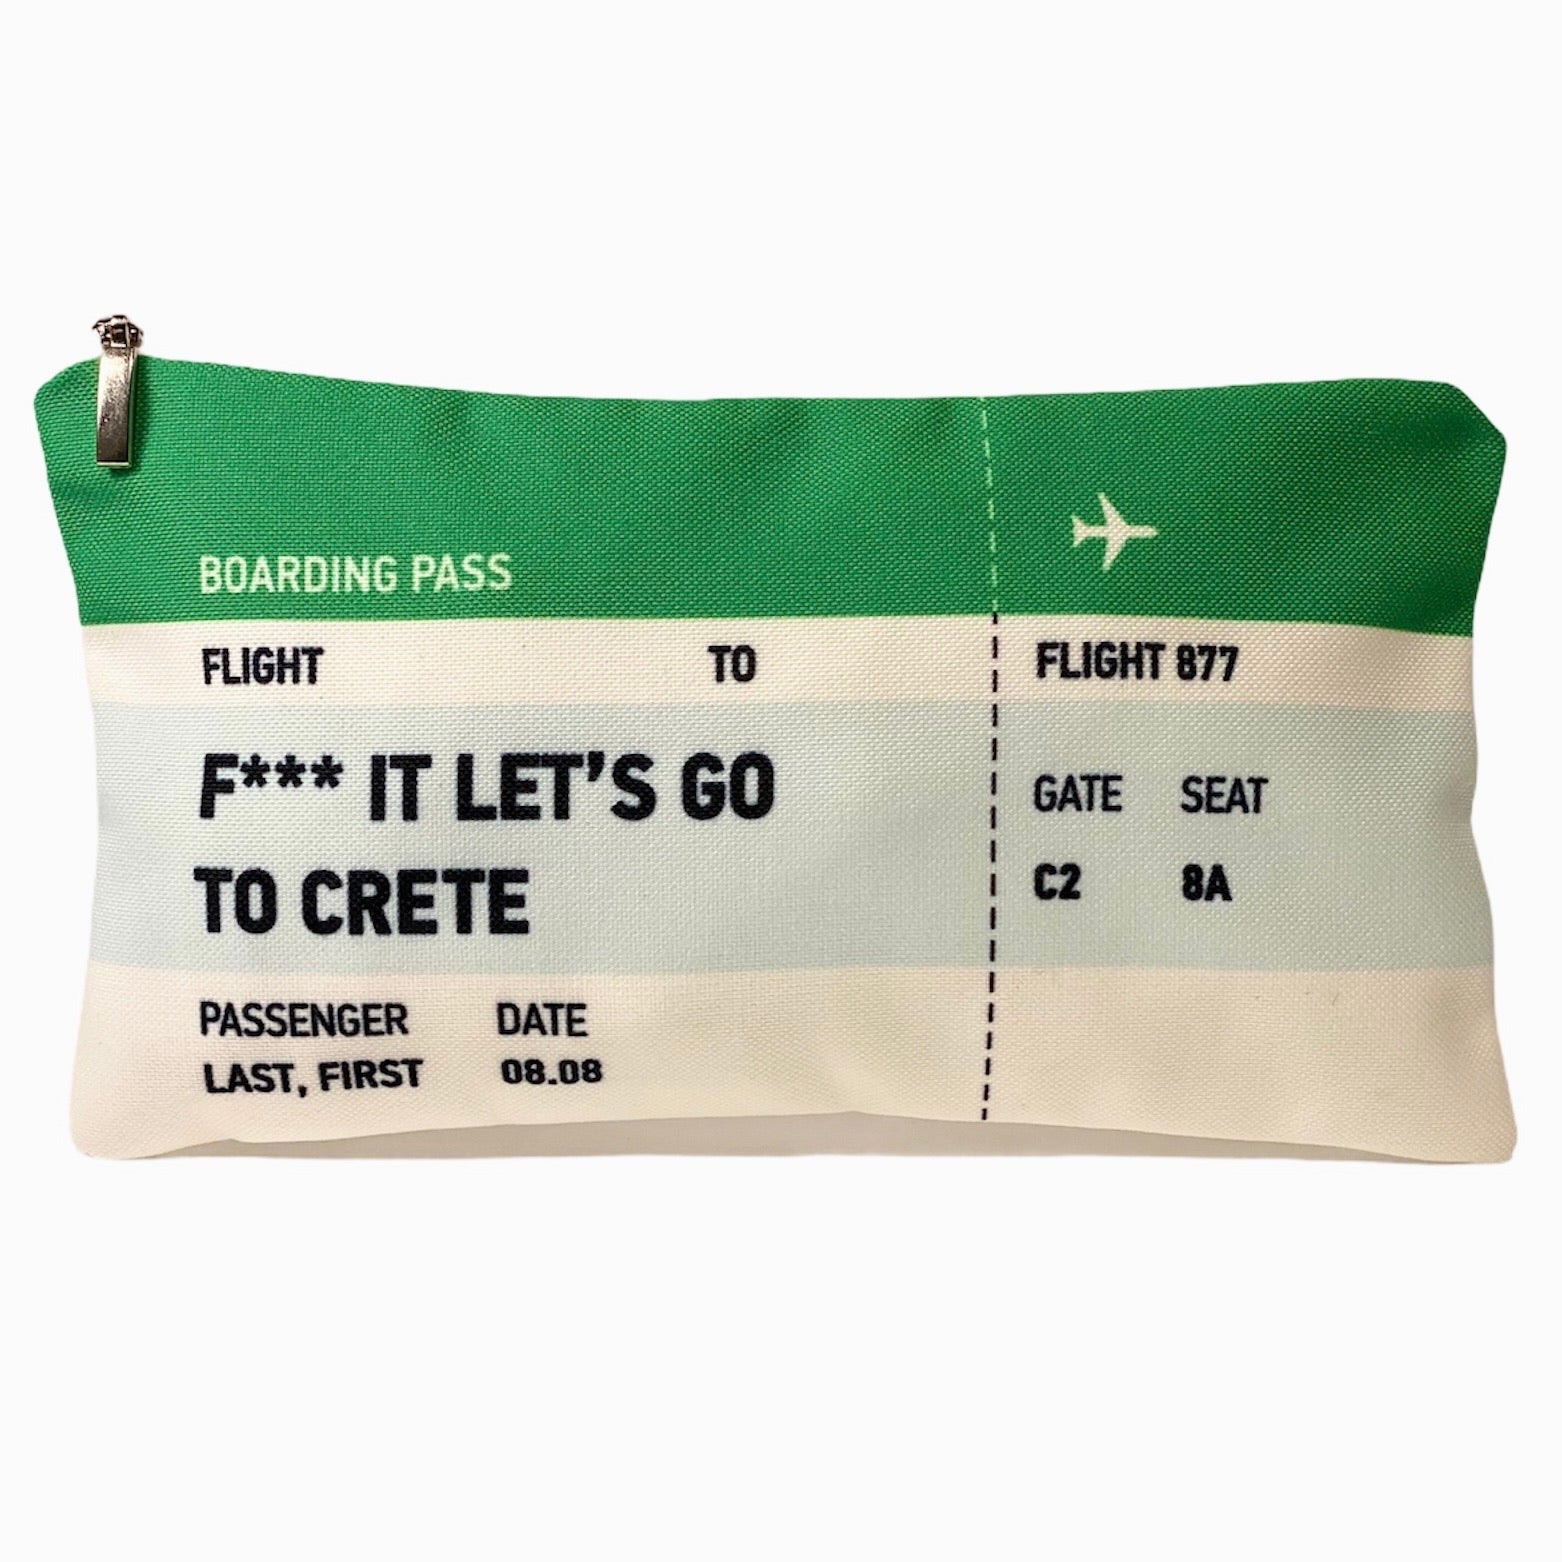 Lets go to Crete ticket bag